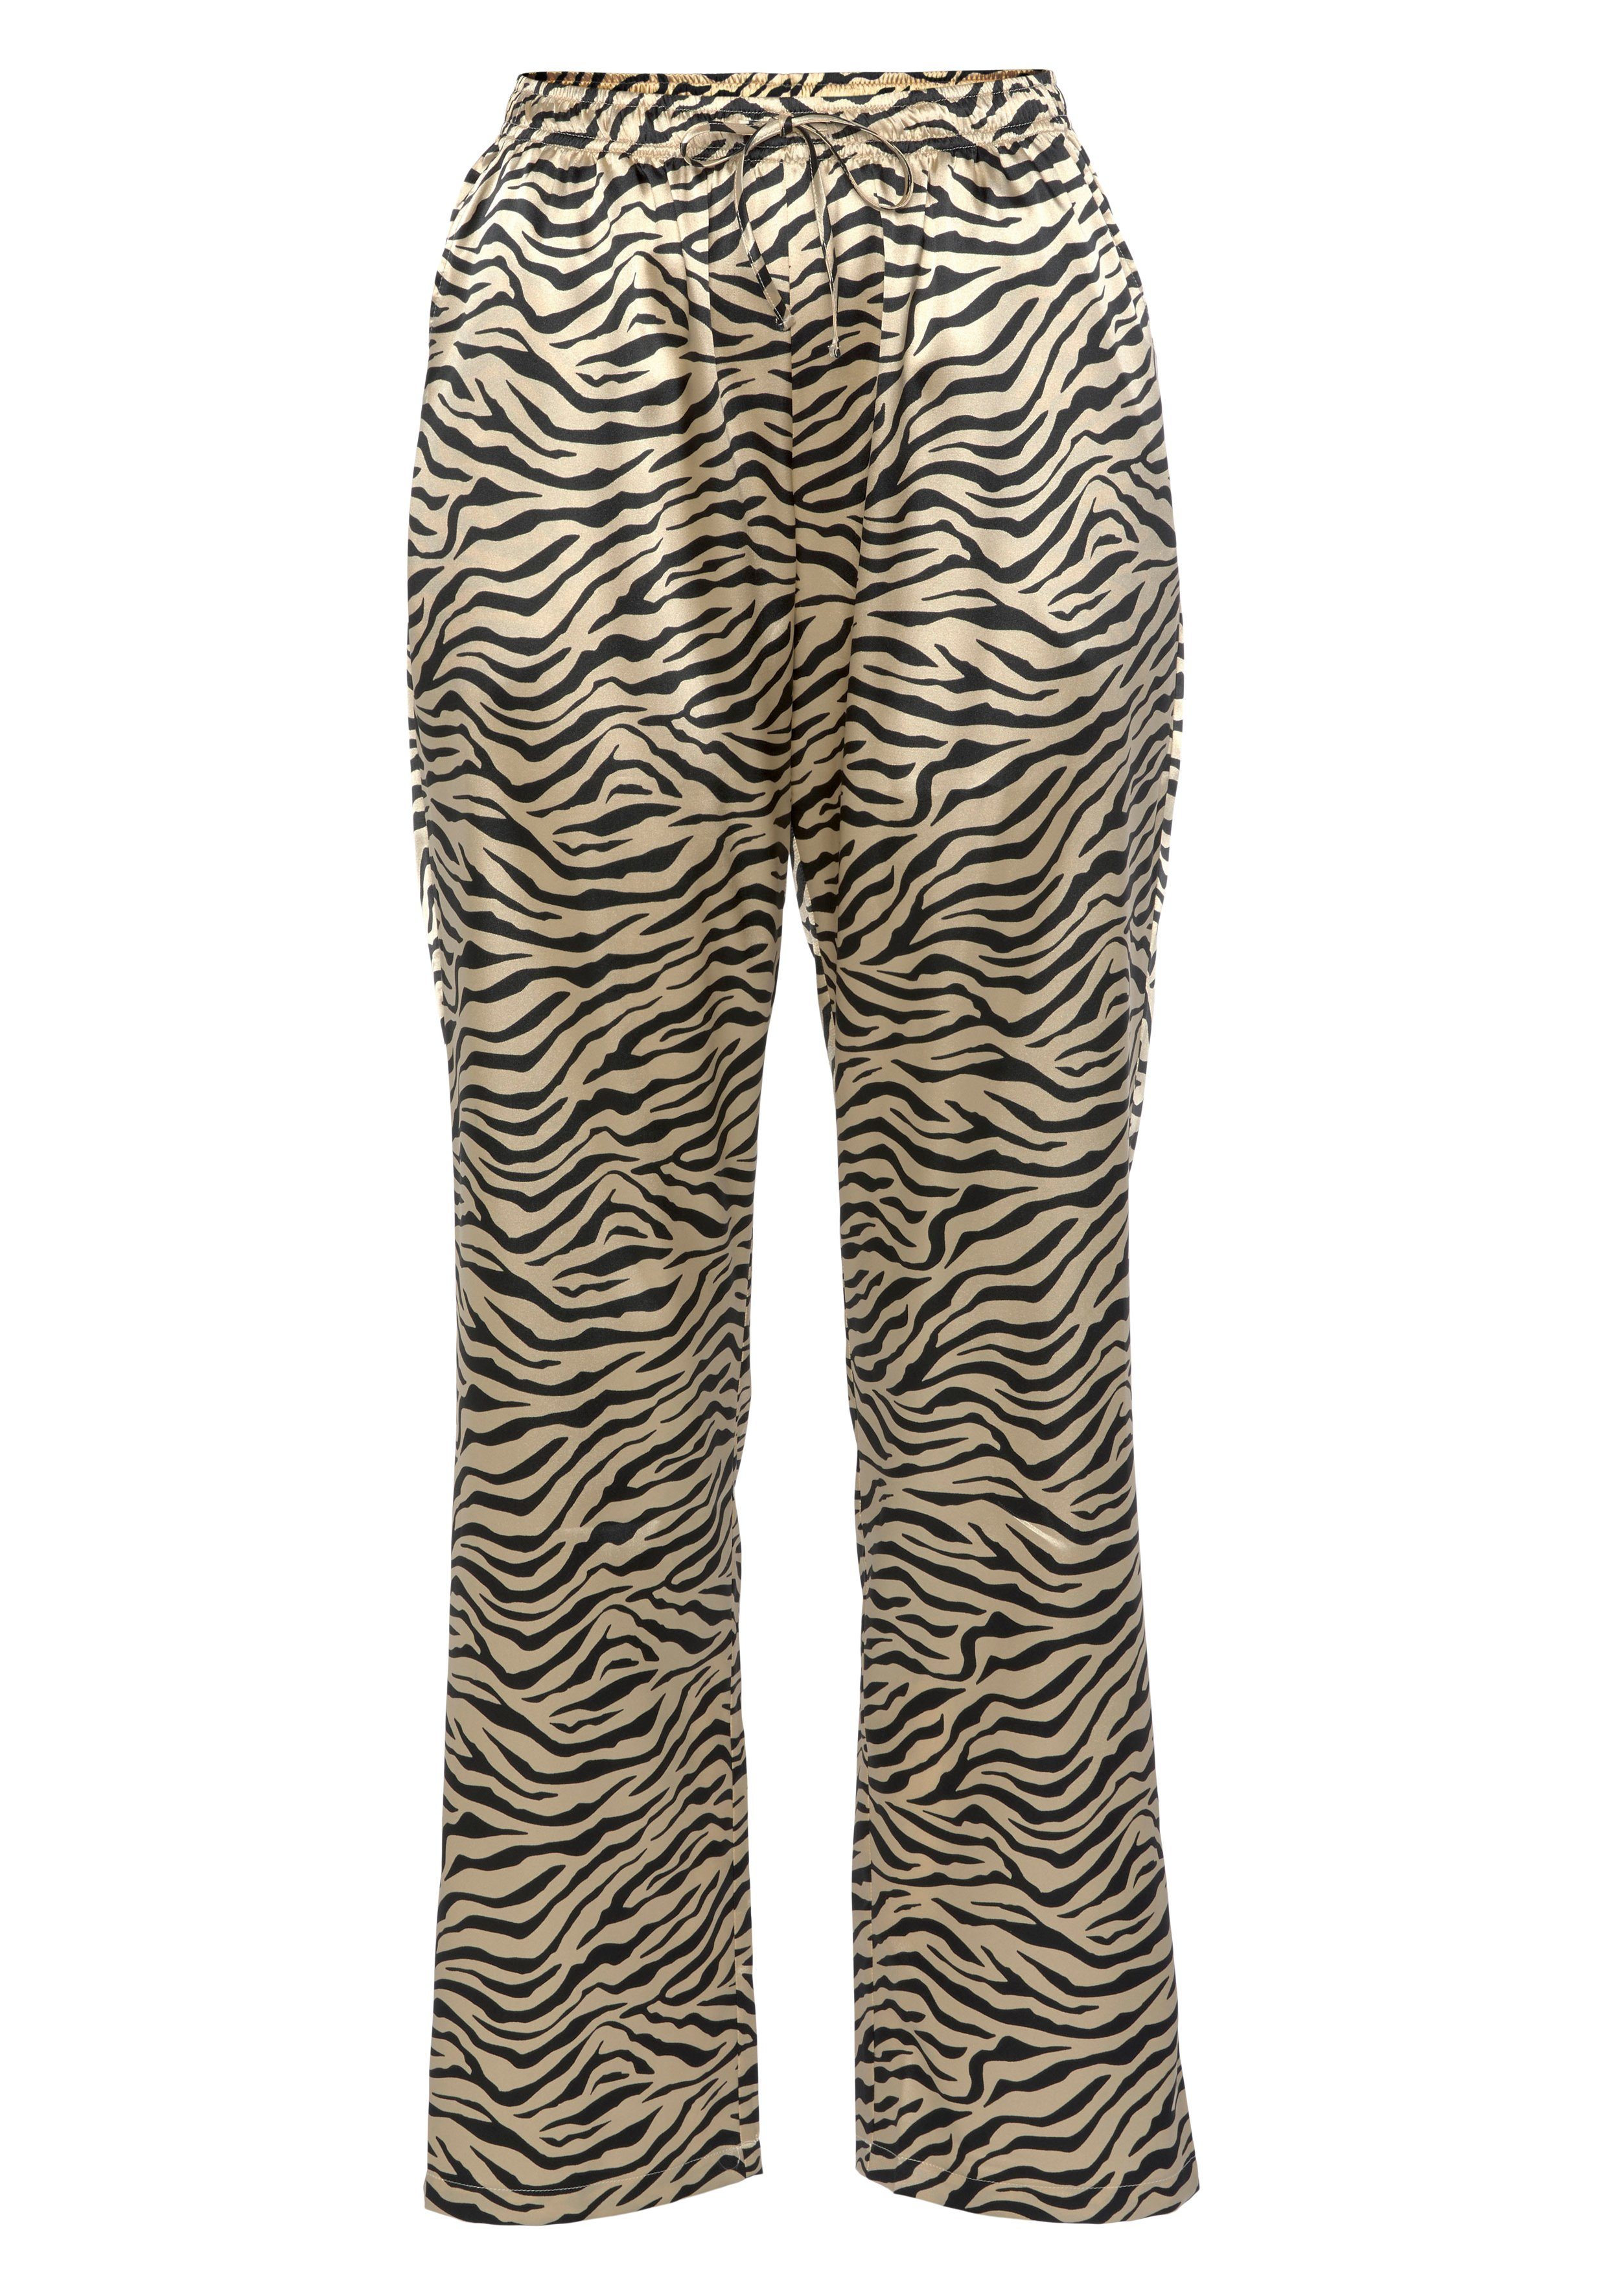 mit schönem Animal-Print Pyjamahose Buffalo zebra-print